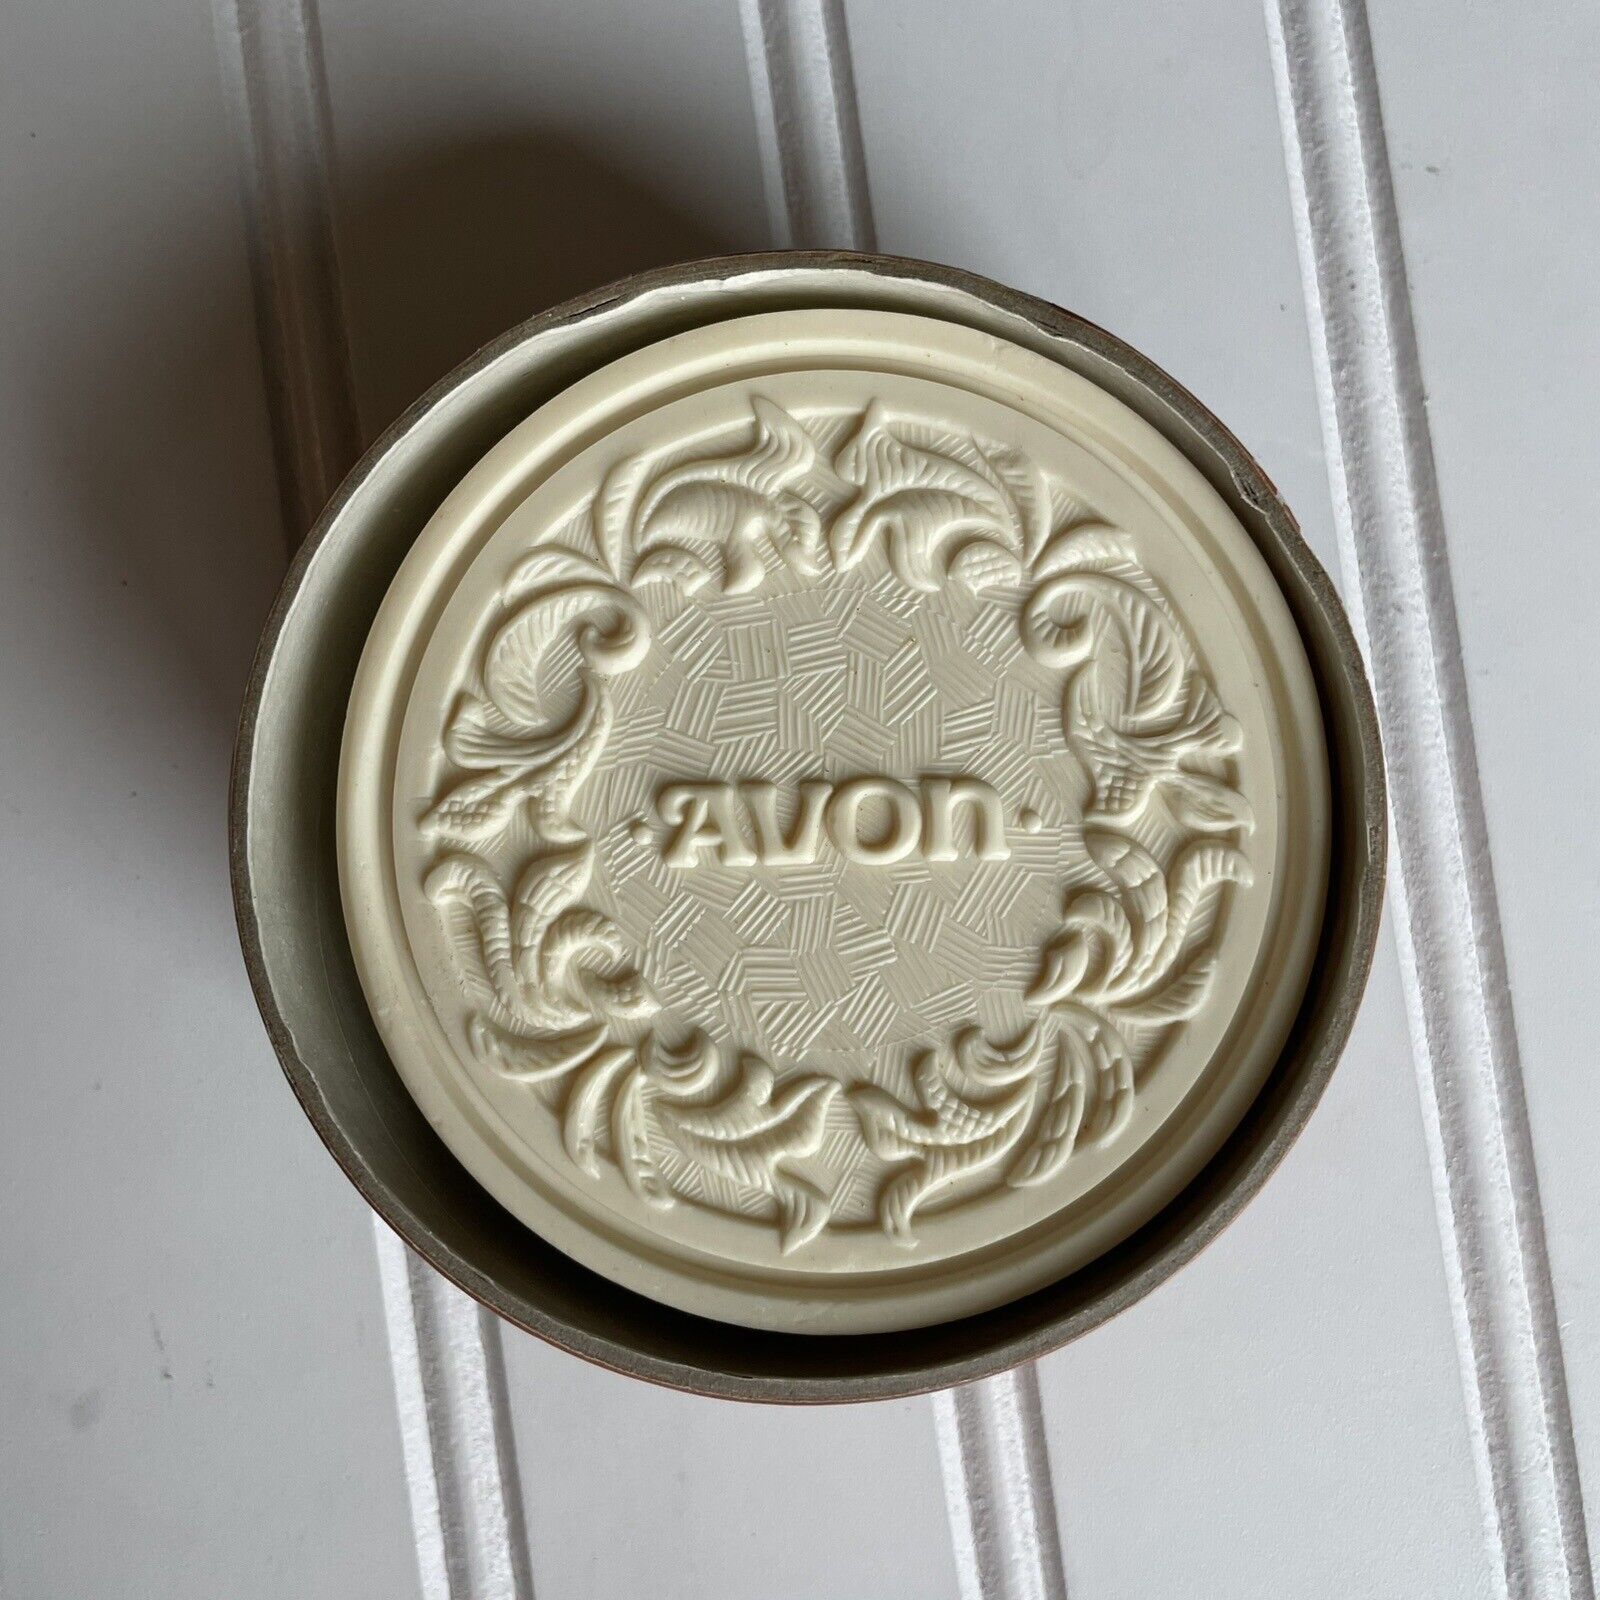 Vintage Avon Wild Country Gift Soap Trinket Tin Box Fragrance Man Cave Decor Без бренда - фотография #15